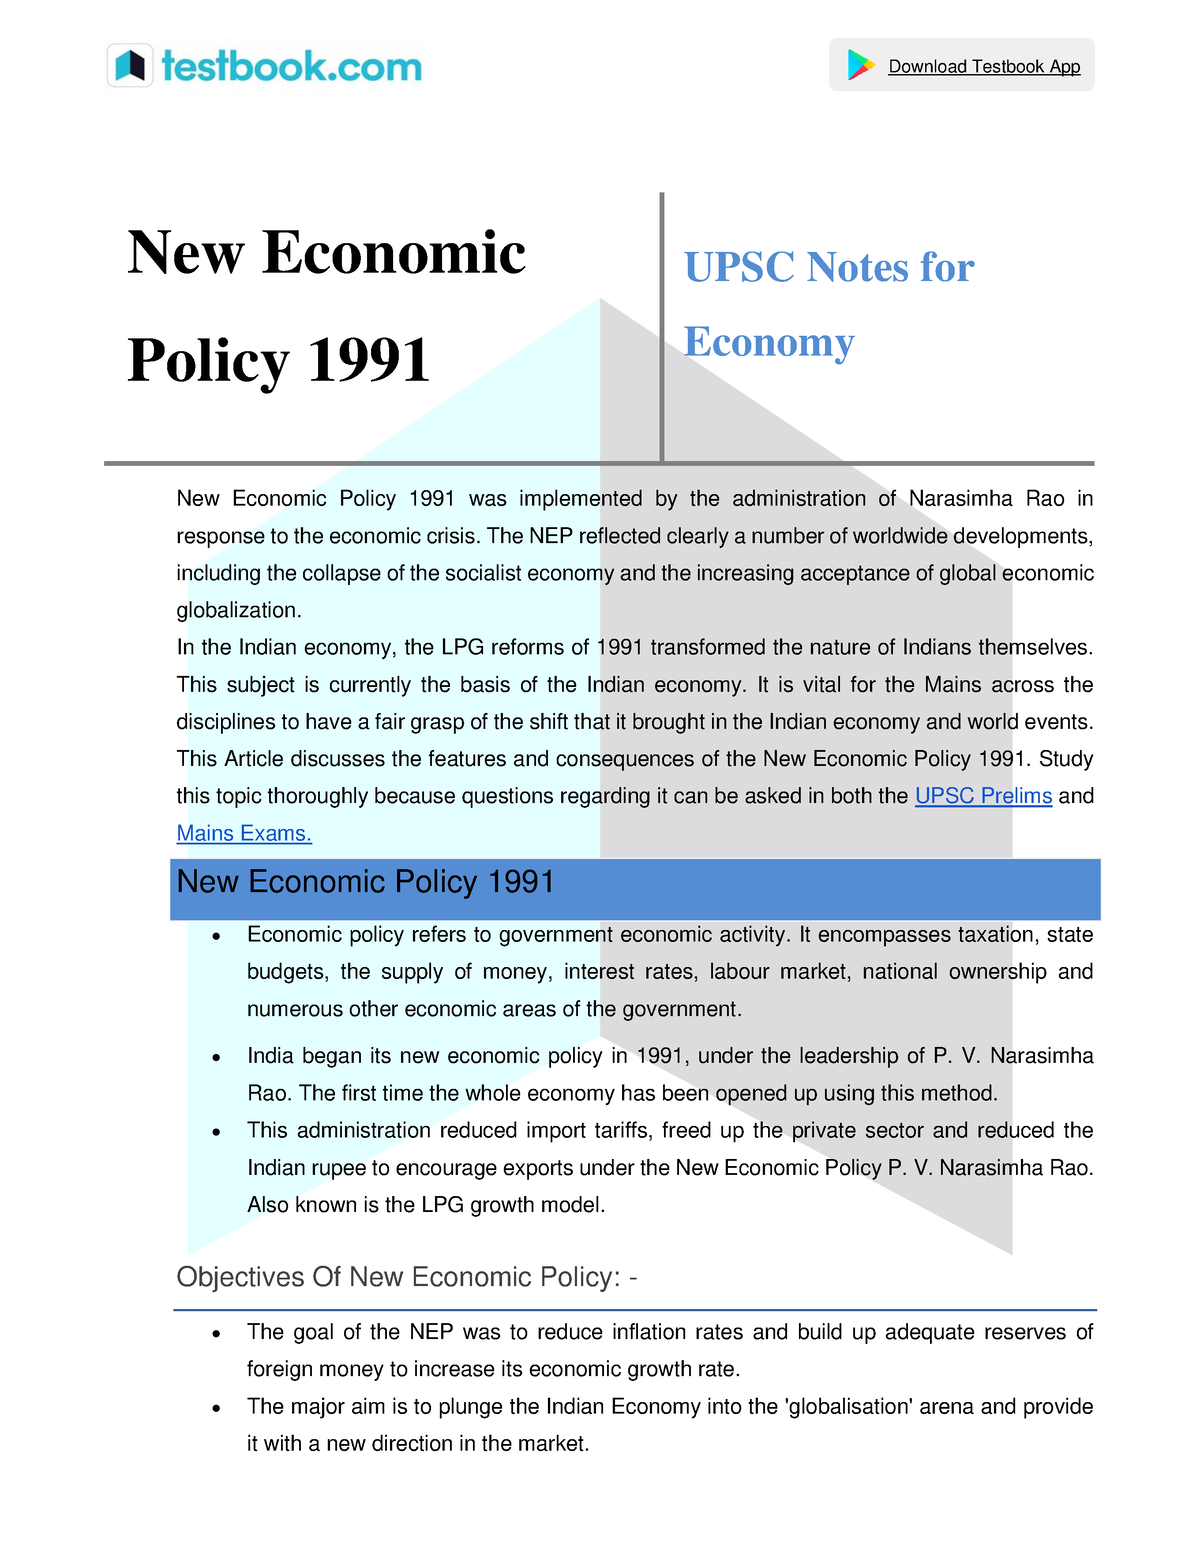 case study on new economic policy 1991